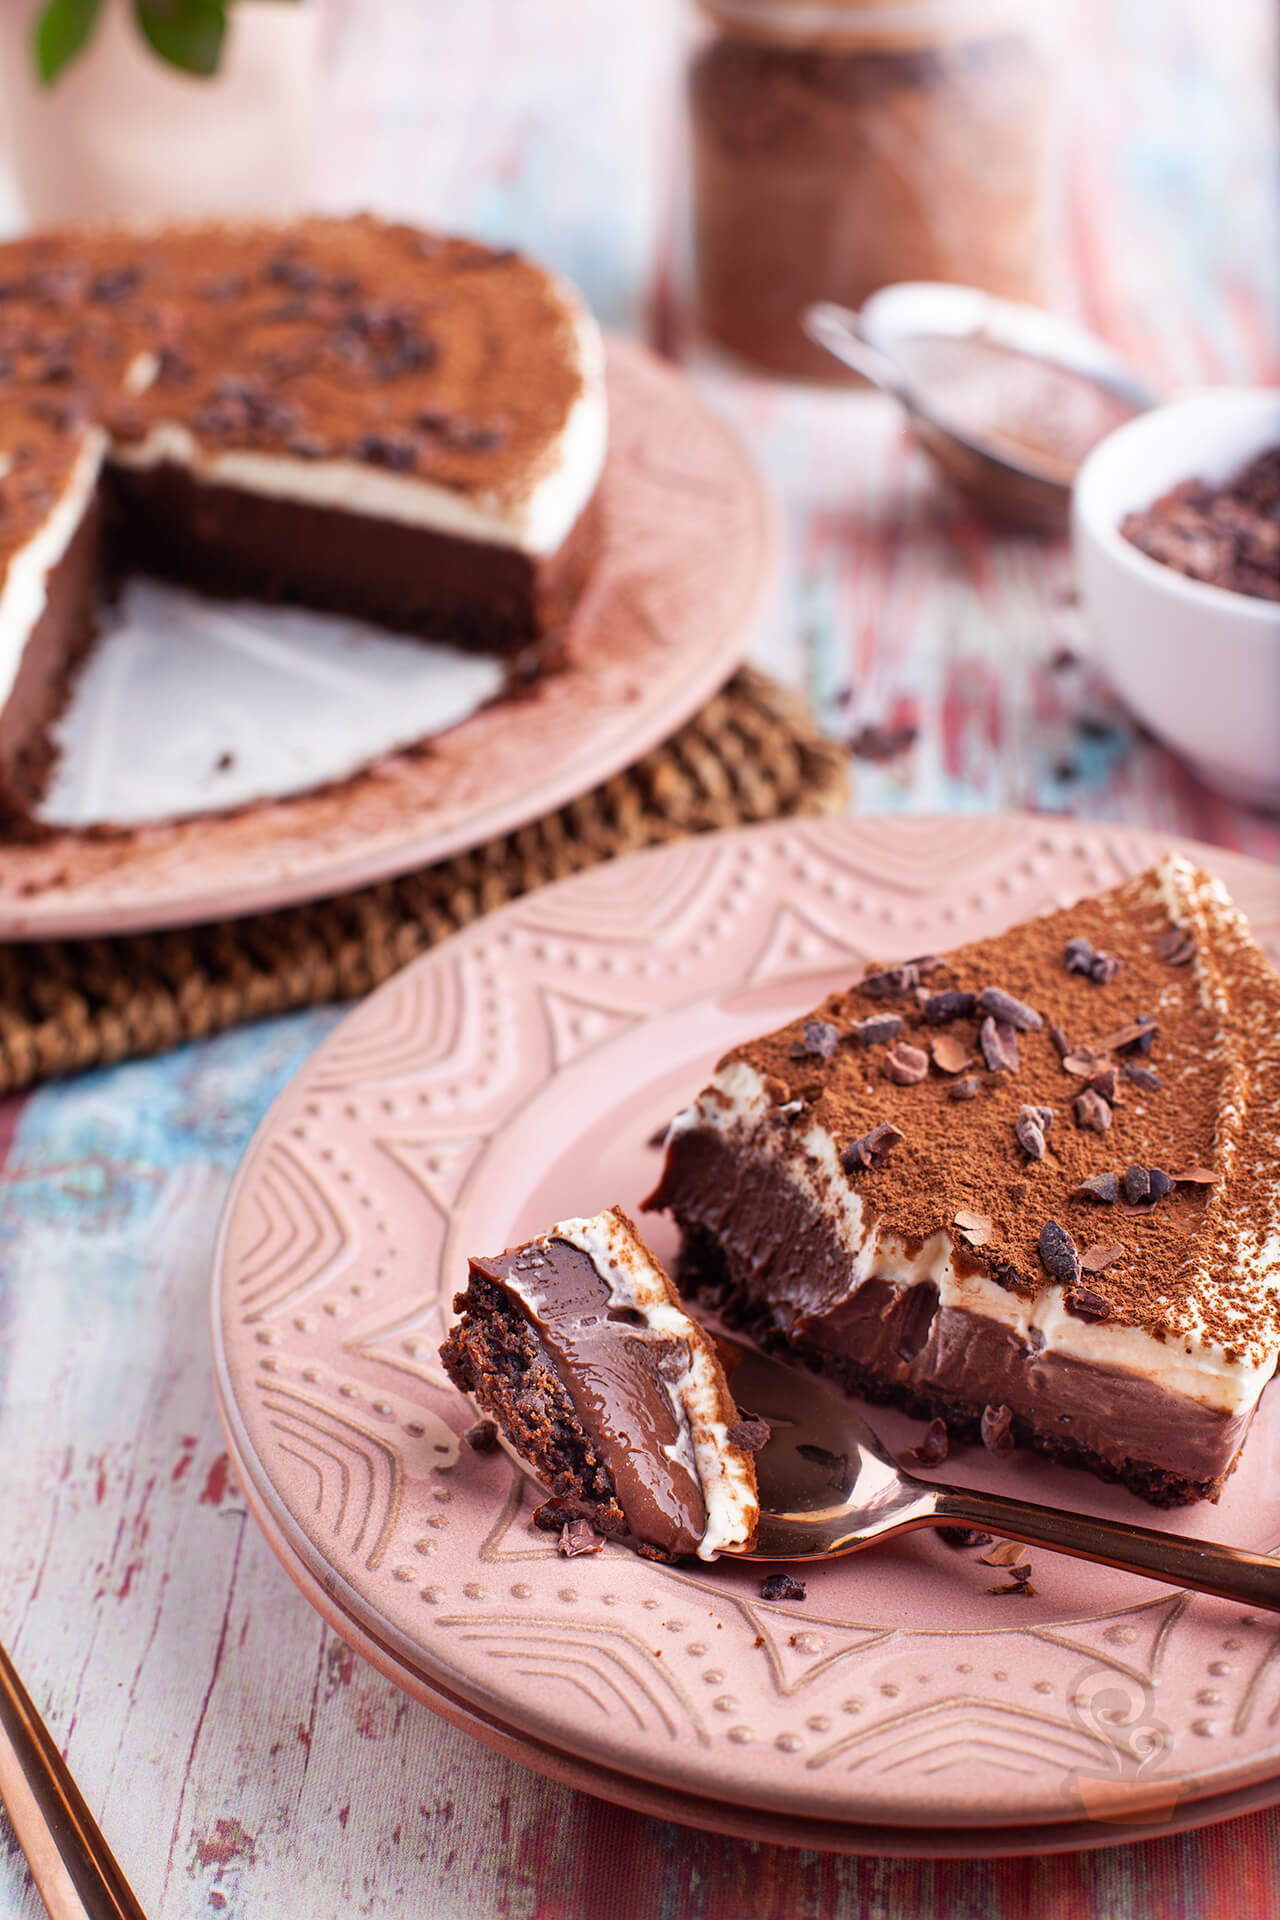 Torta de chocolate perfeita - foto: naminhapanela